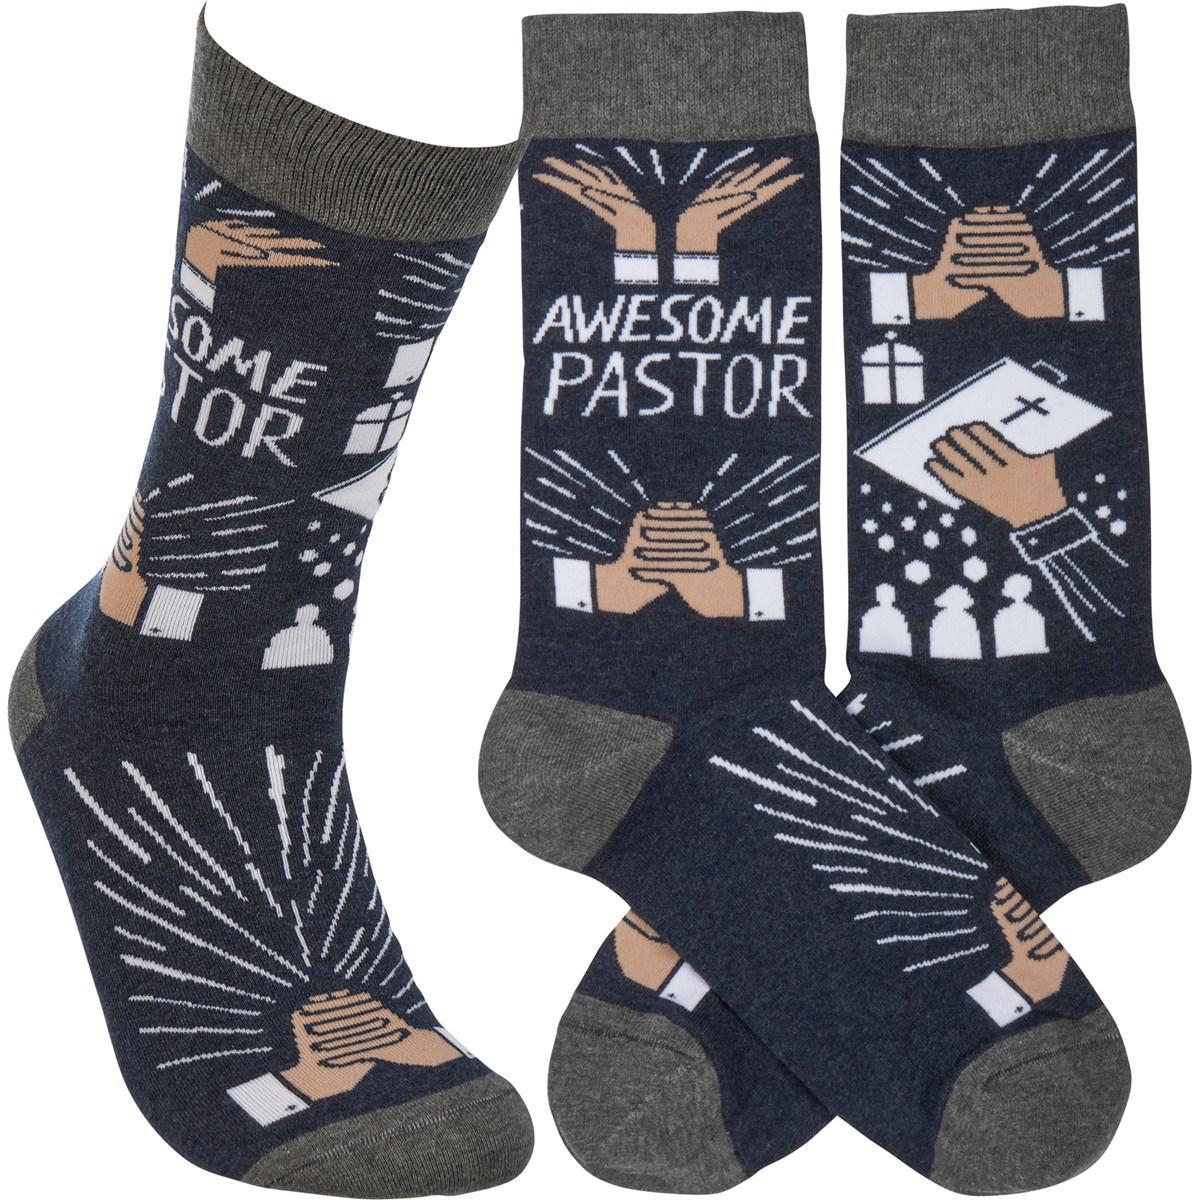 Awesome Pastor Socks